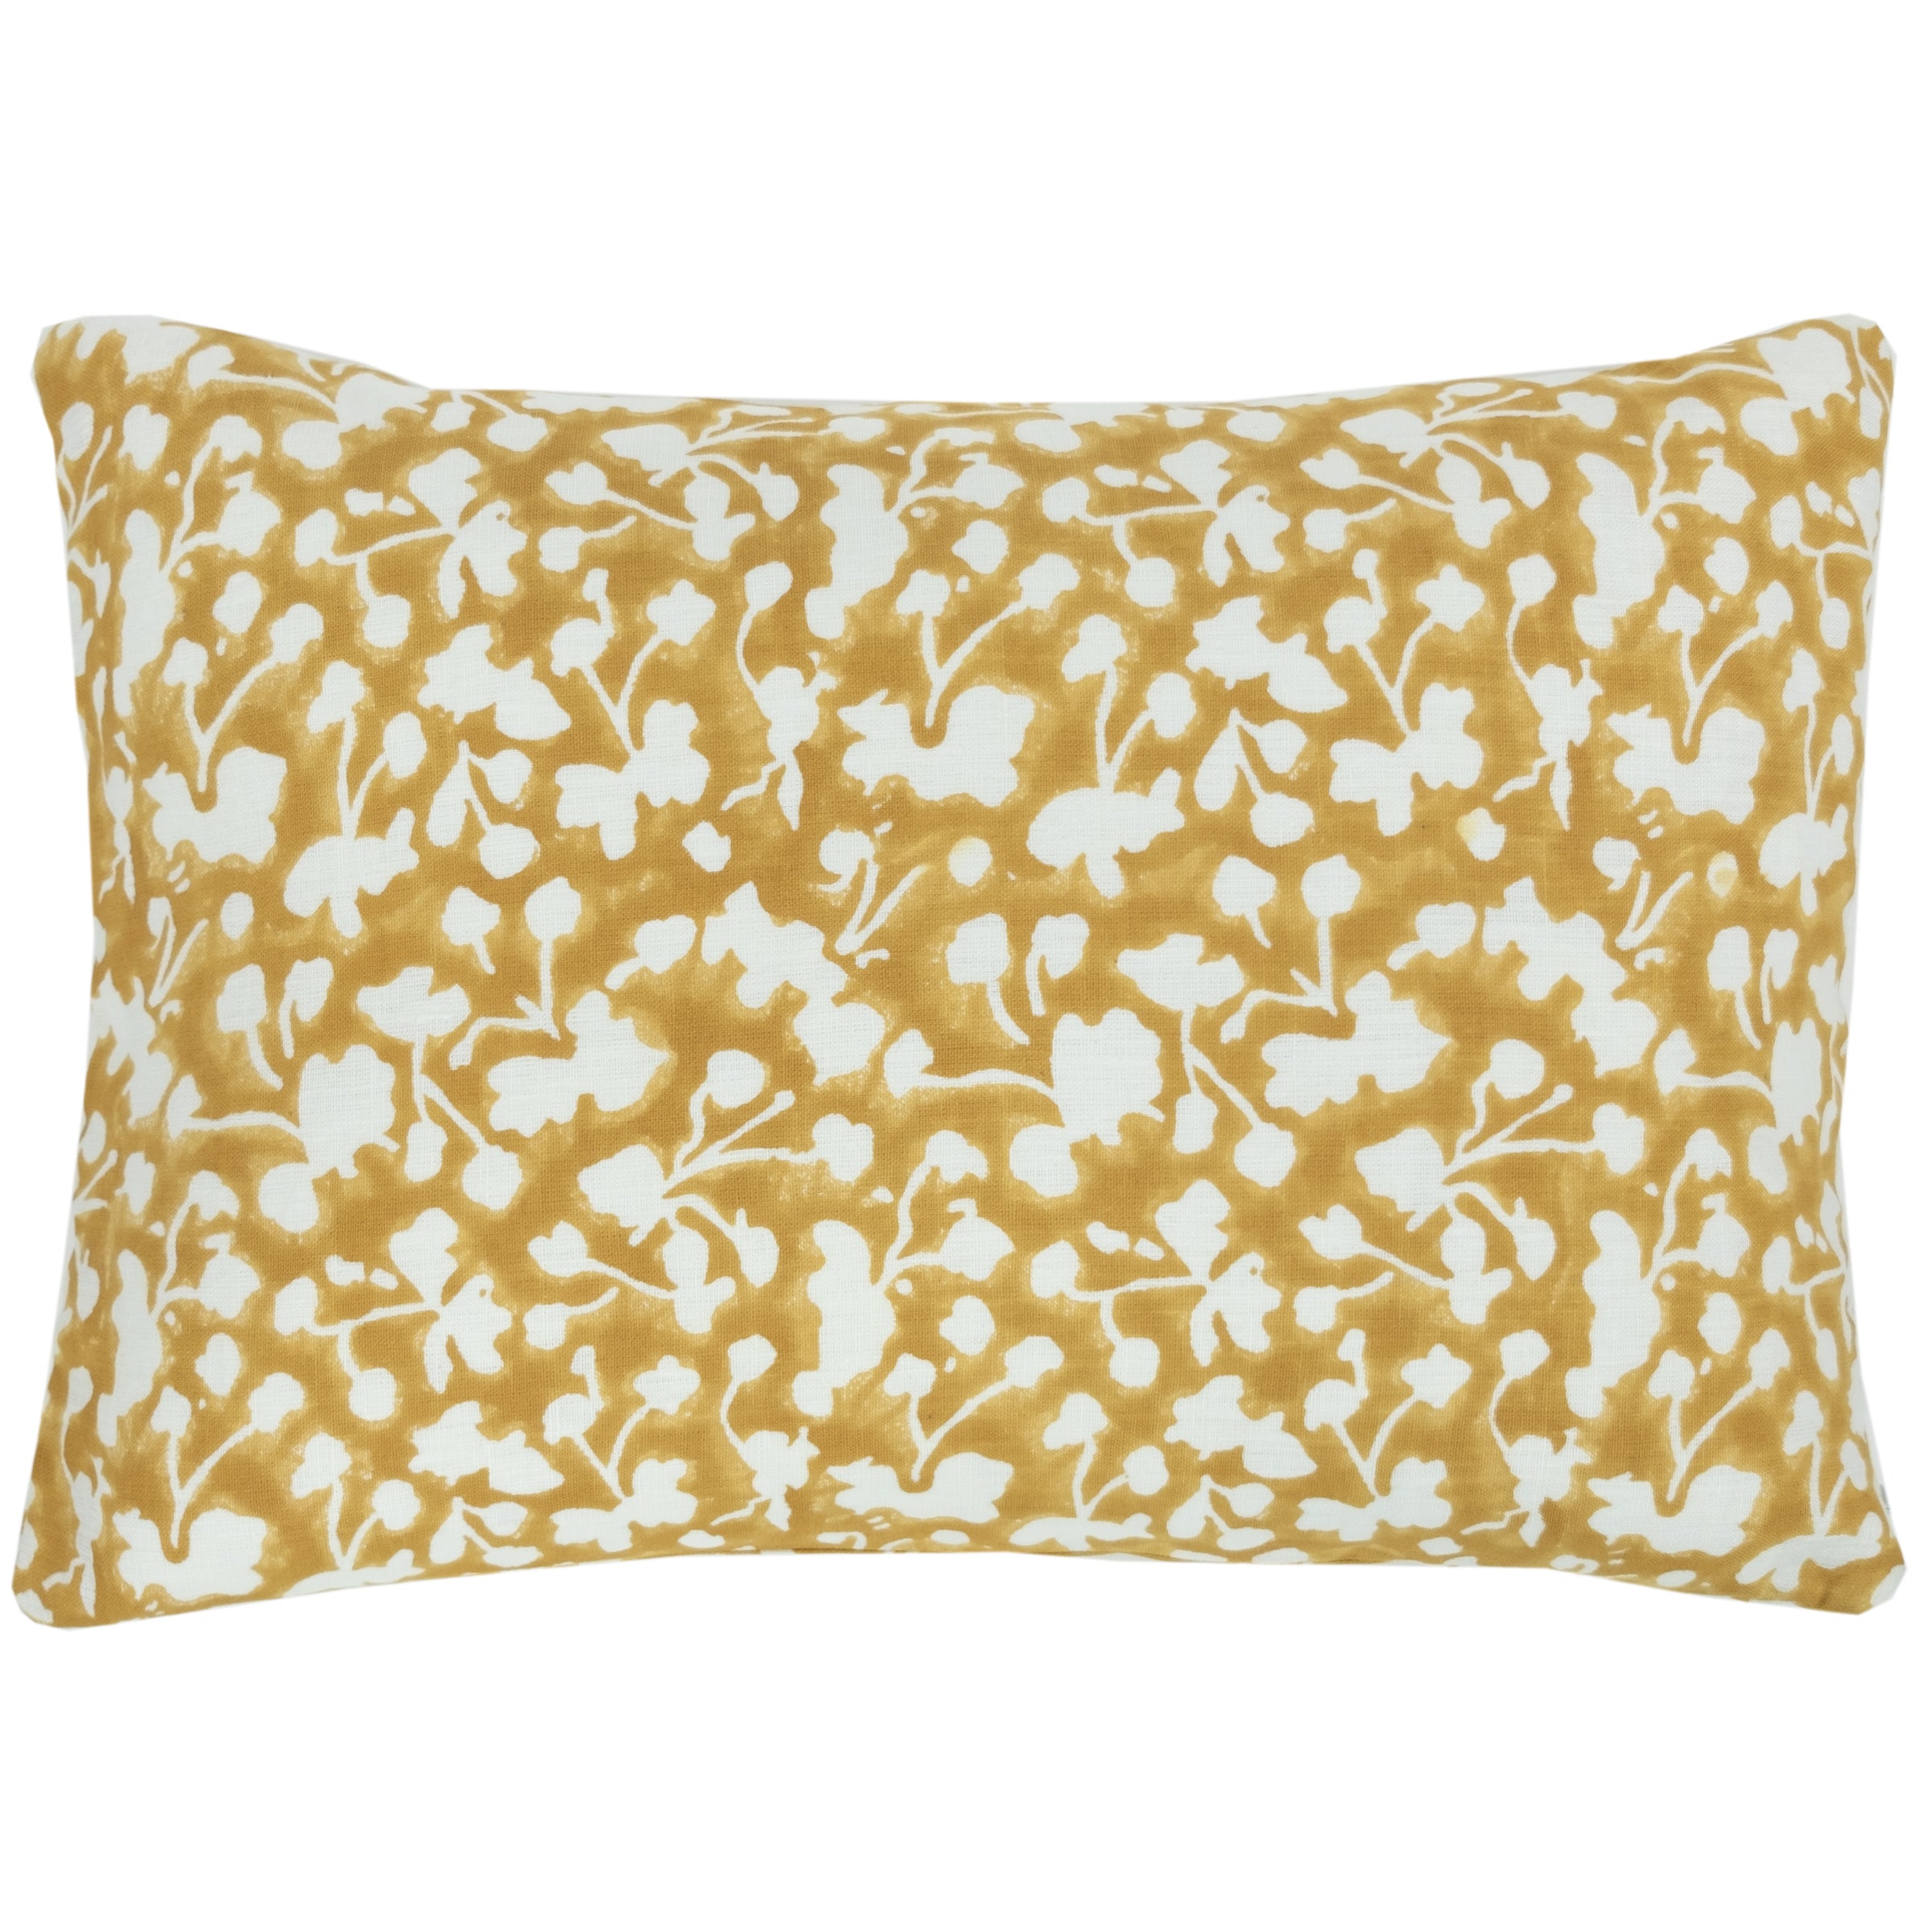 Zara Dijon Linen Pillow